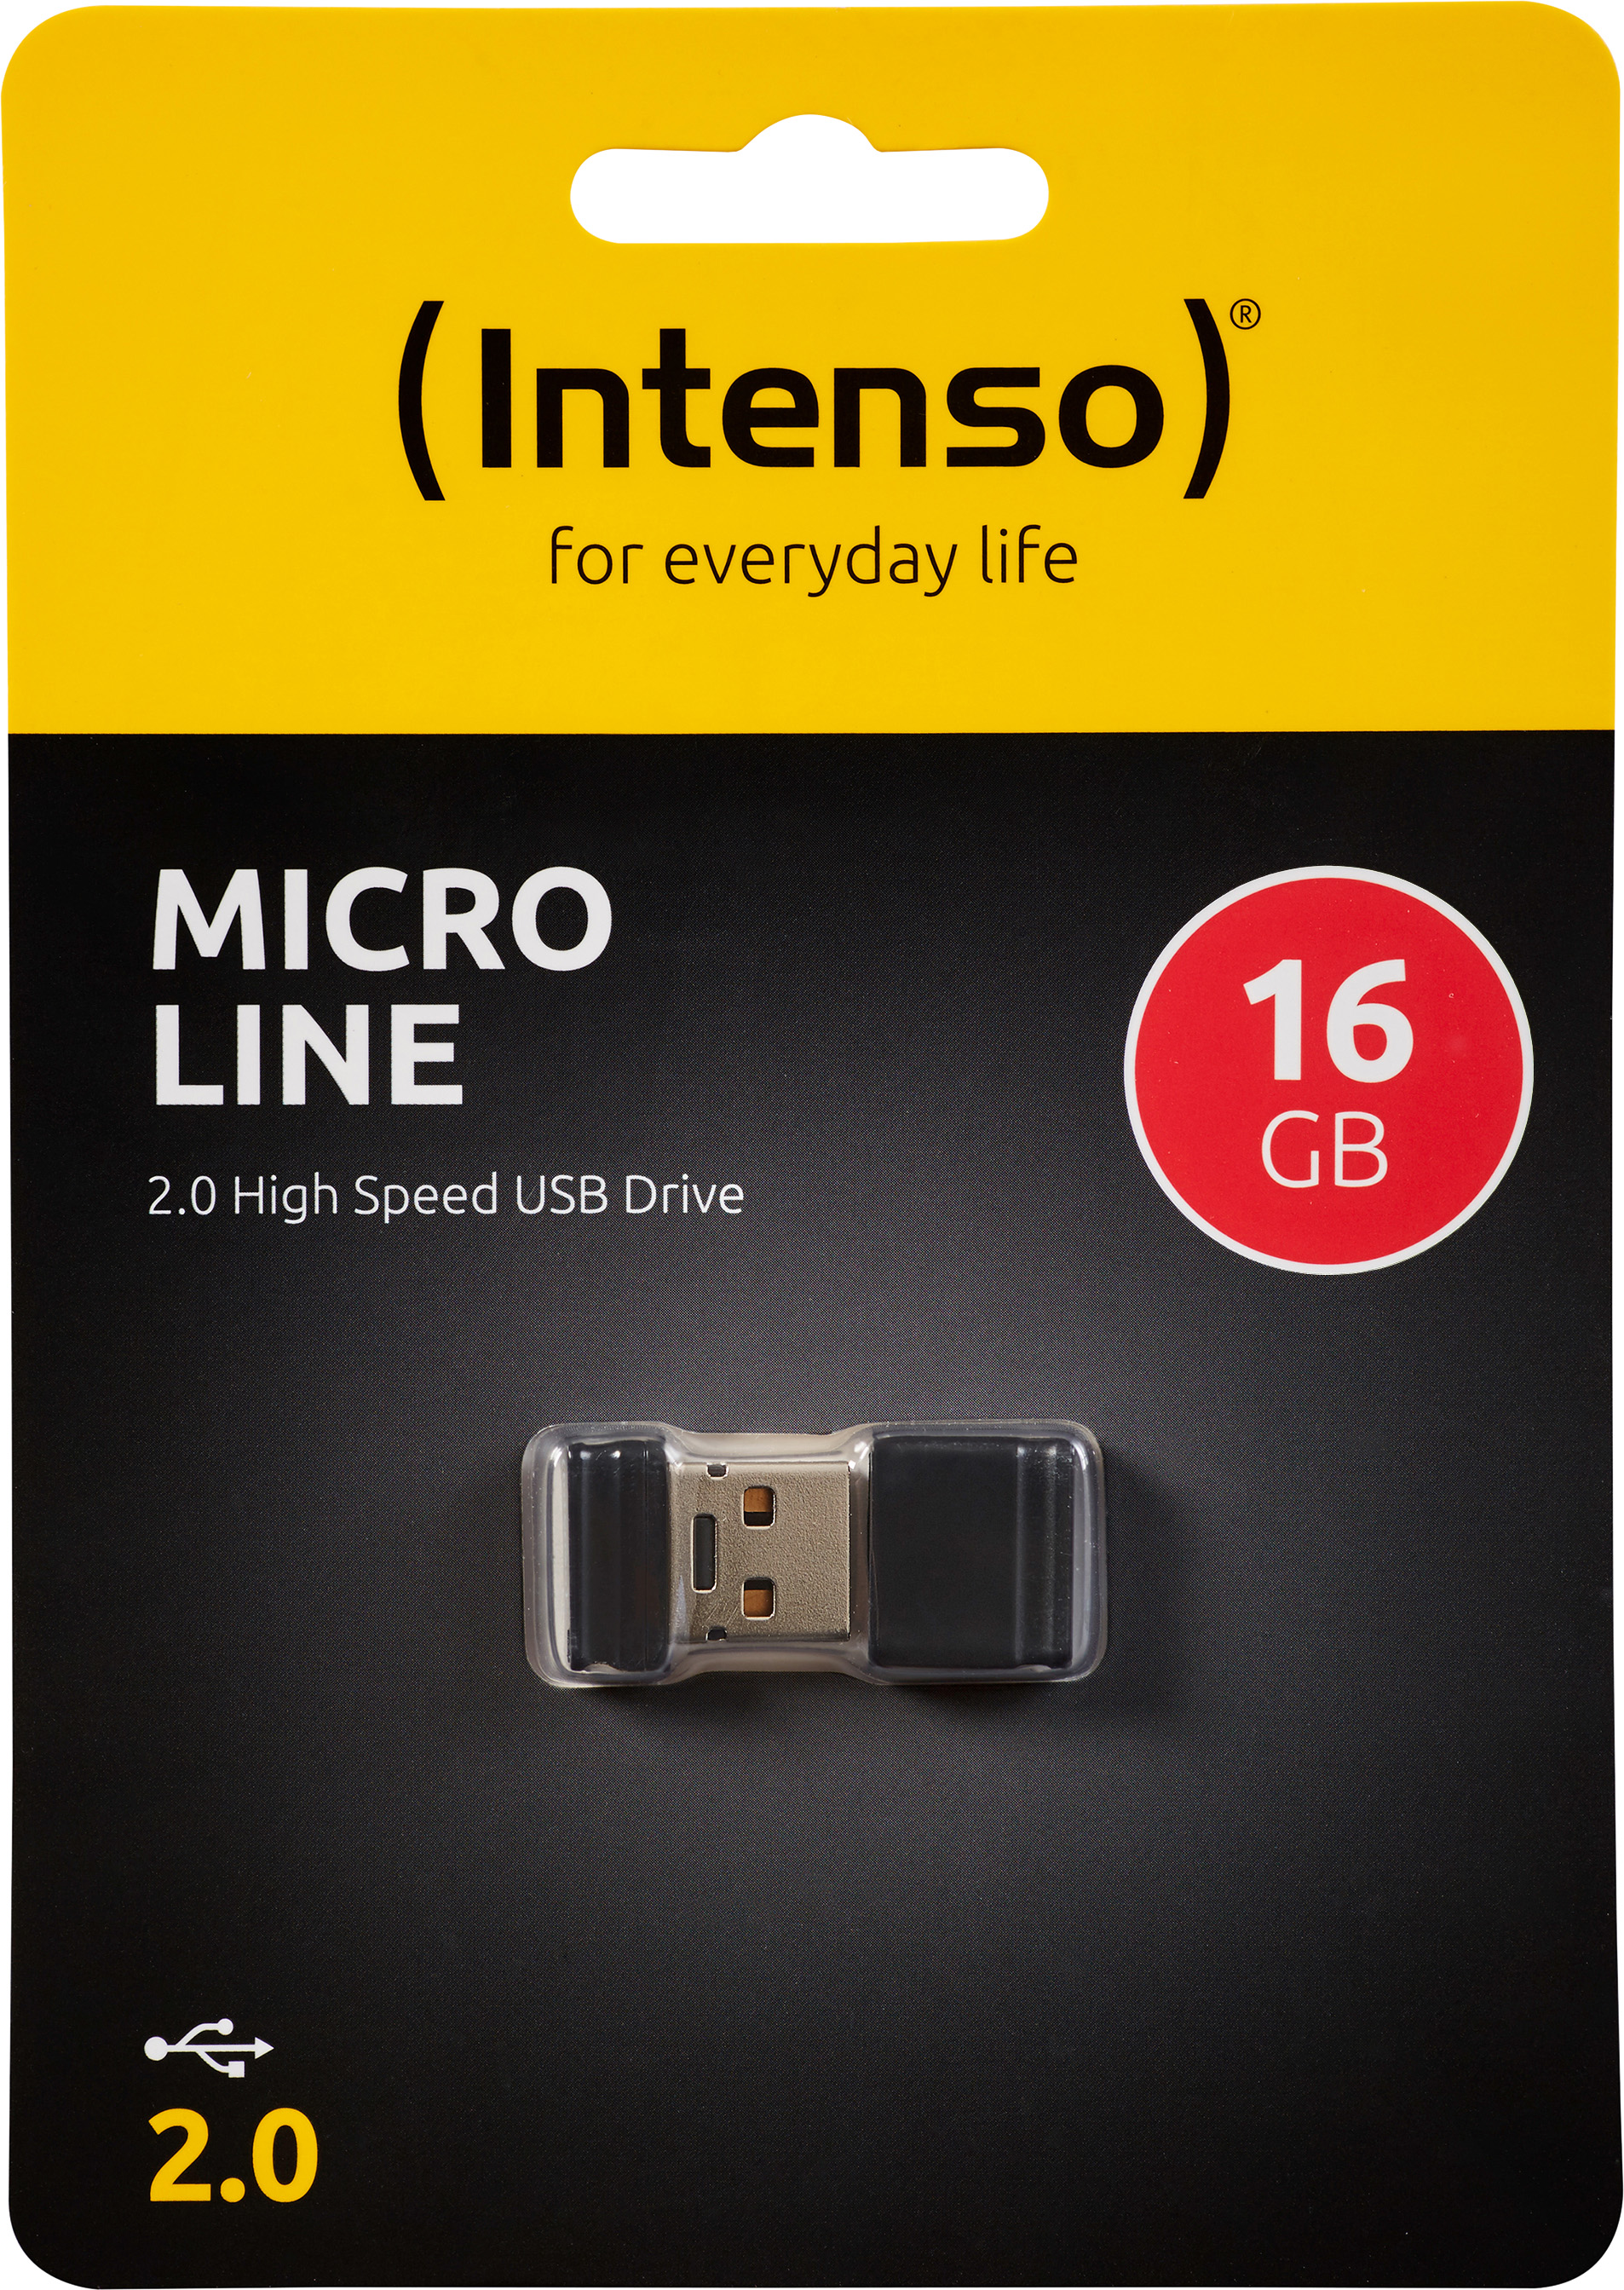 Intenso USB 2.0 Stick 16GB, Micro Line, schwarz (R) 16.5MB/s, (W) 6.5MB/s, Retail-Blister